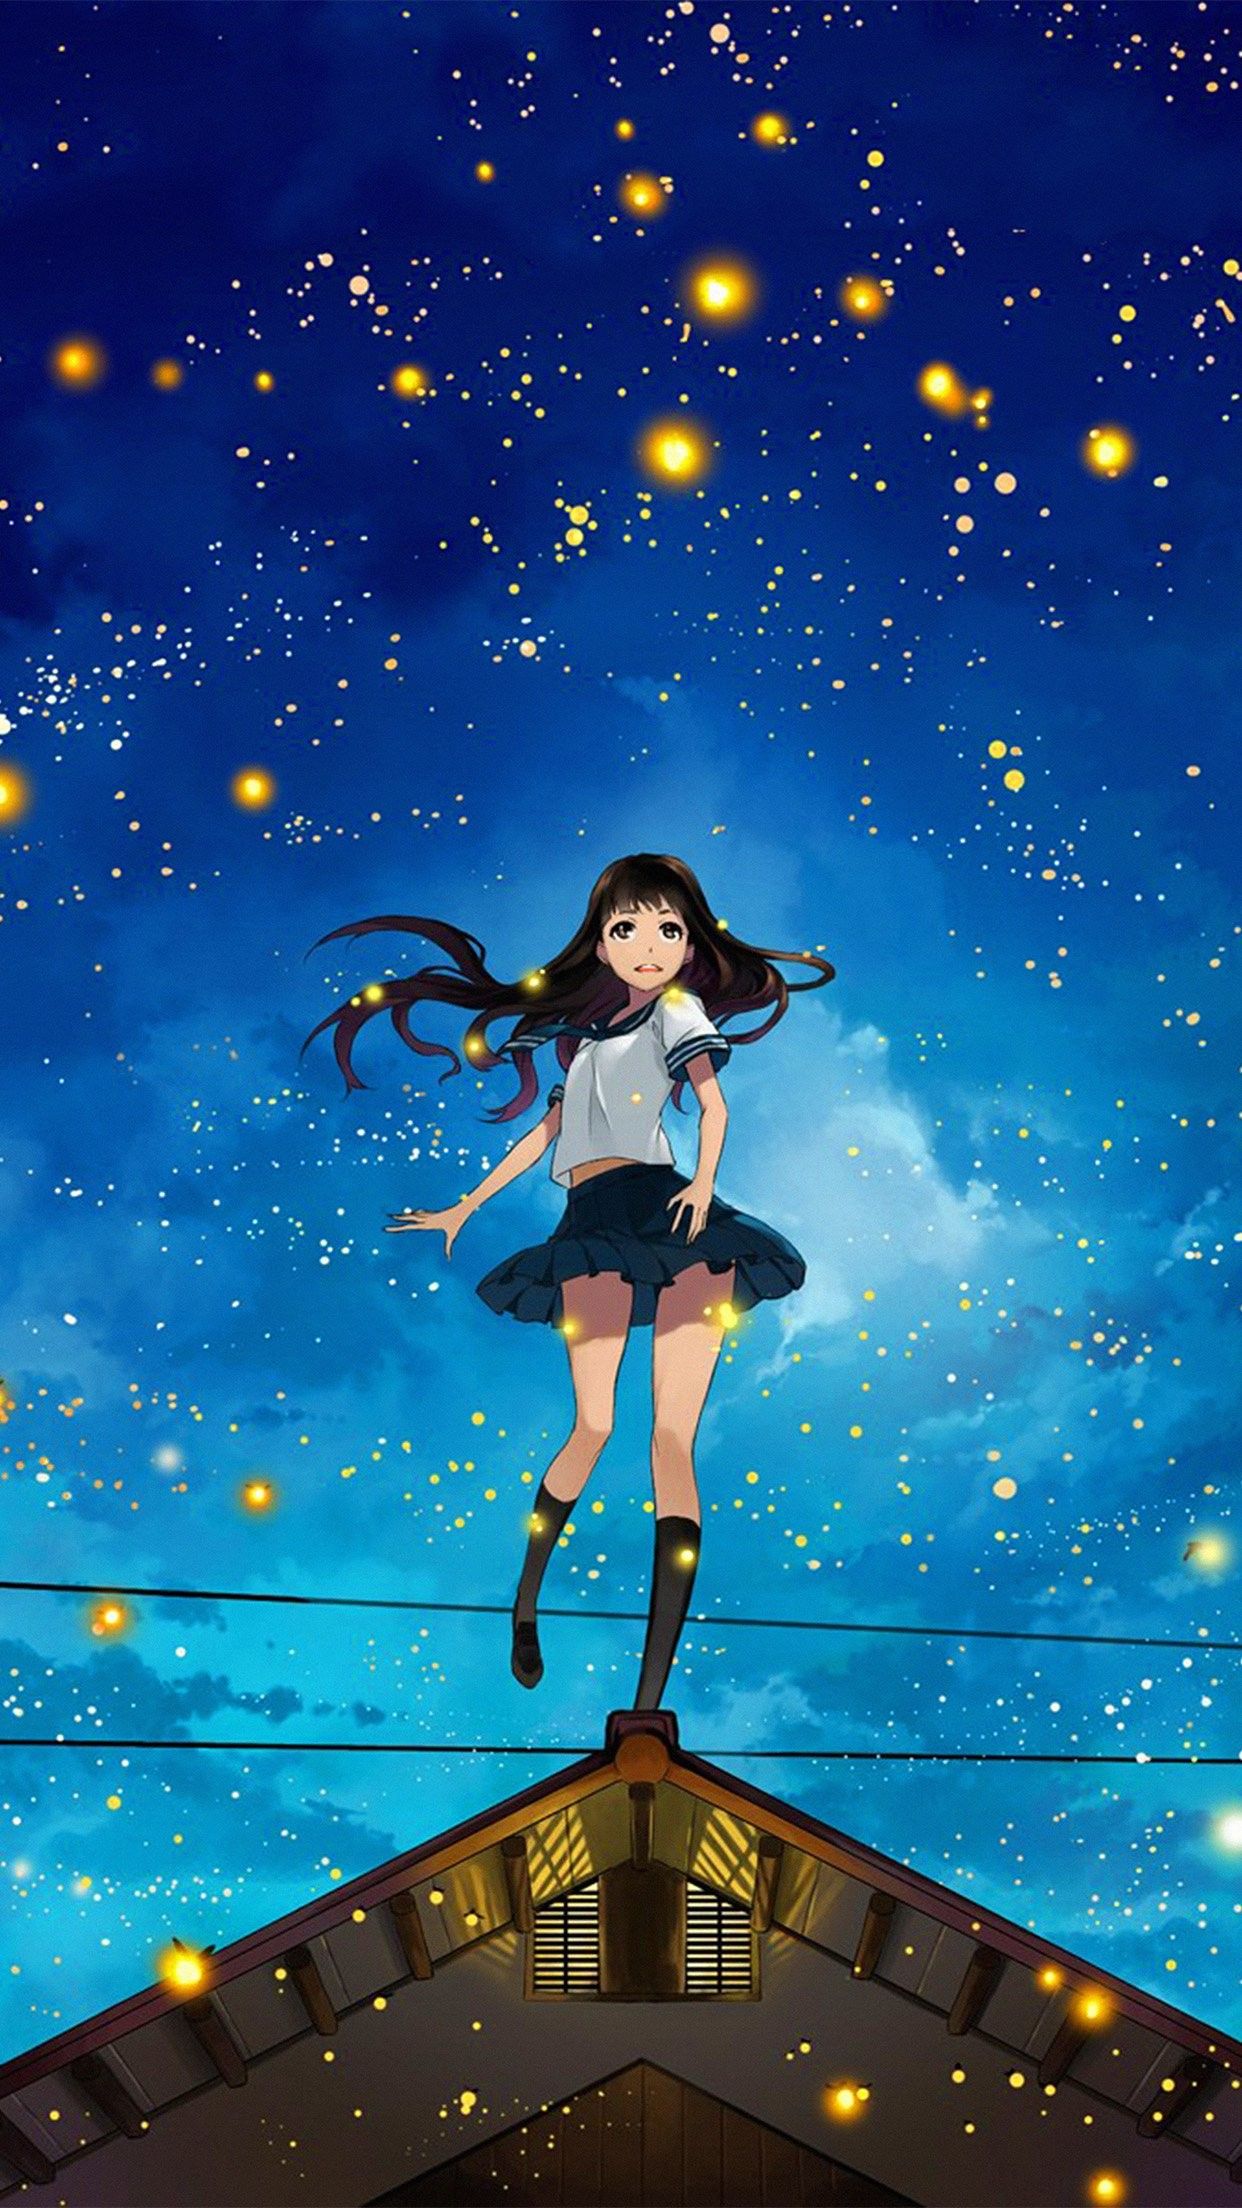 Anime Wallpaper HD: Aesthetic Anime Wallpaper Android